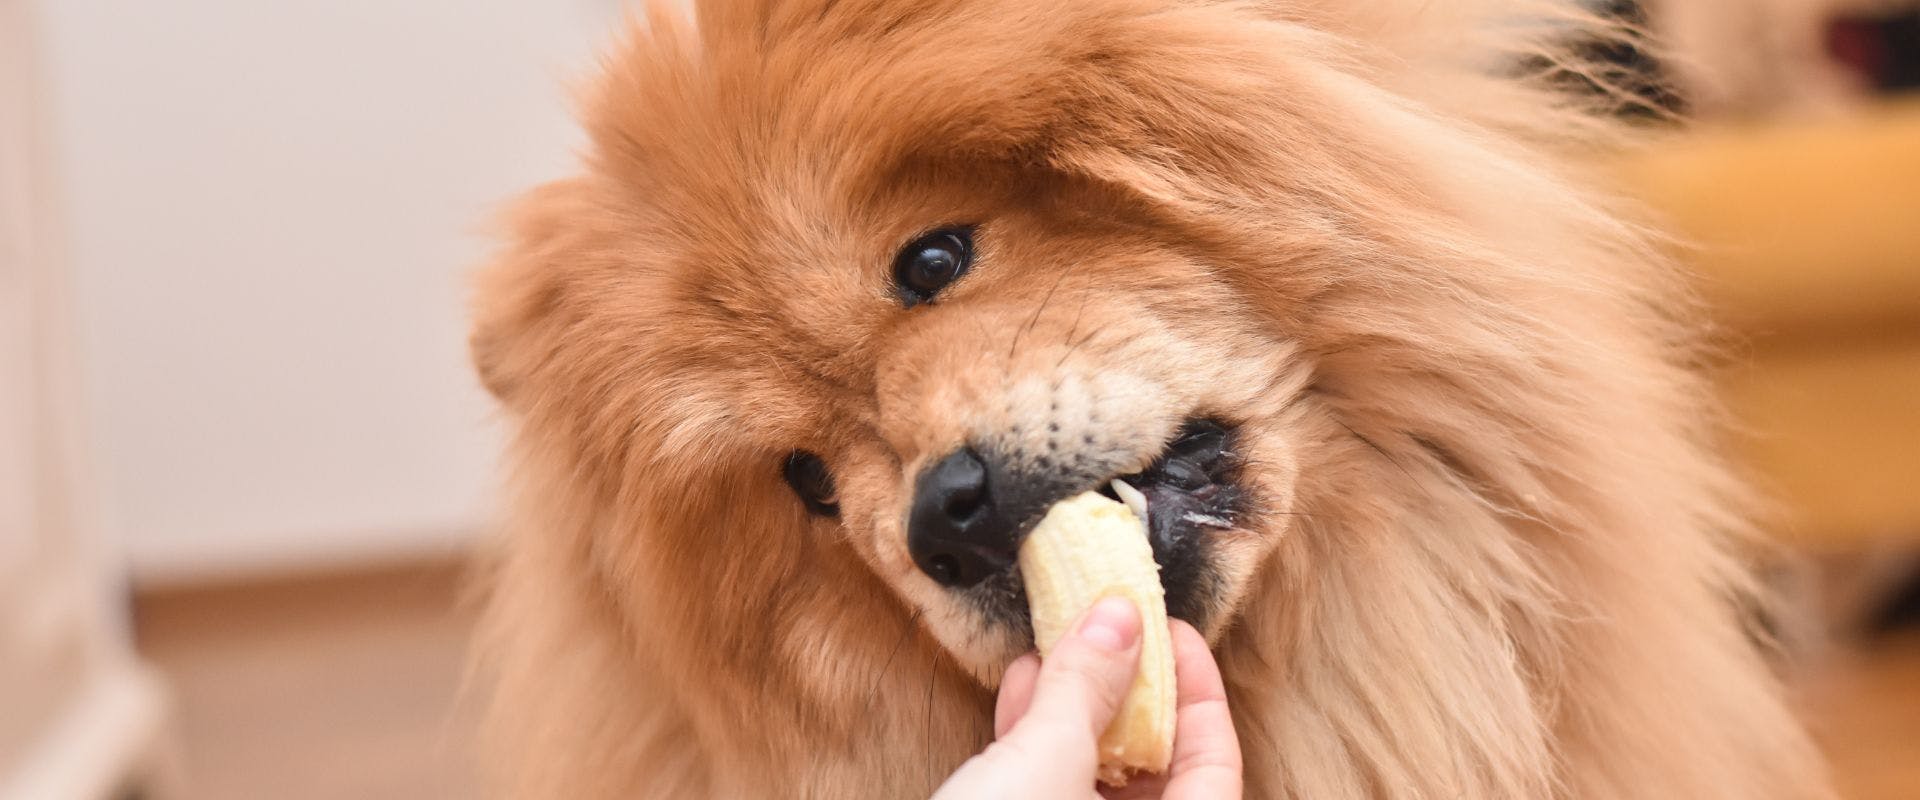 Fluffy dog biting into a peeled banana